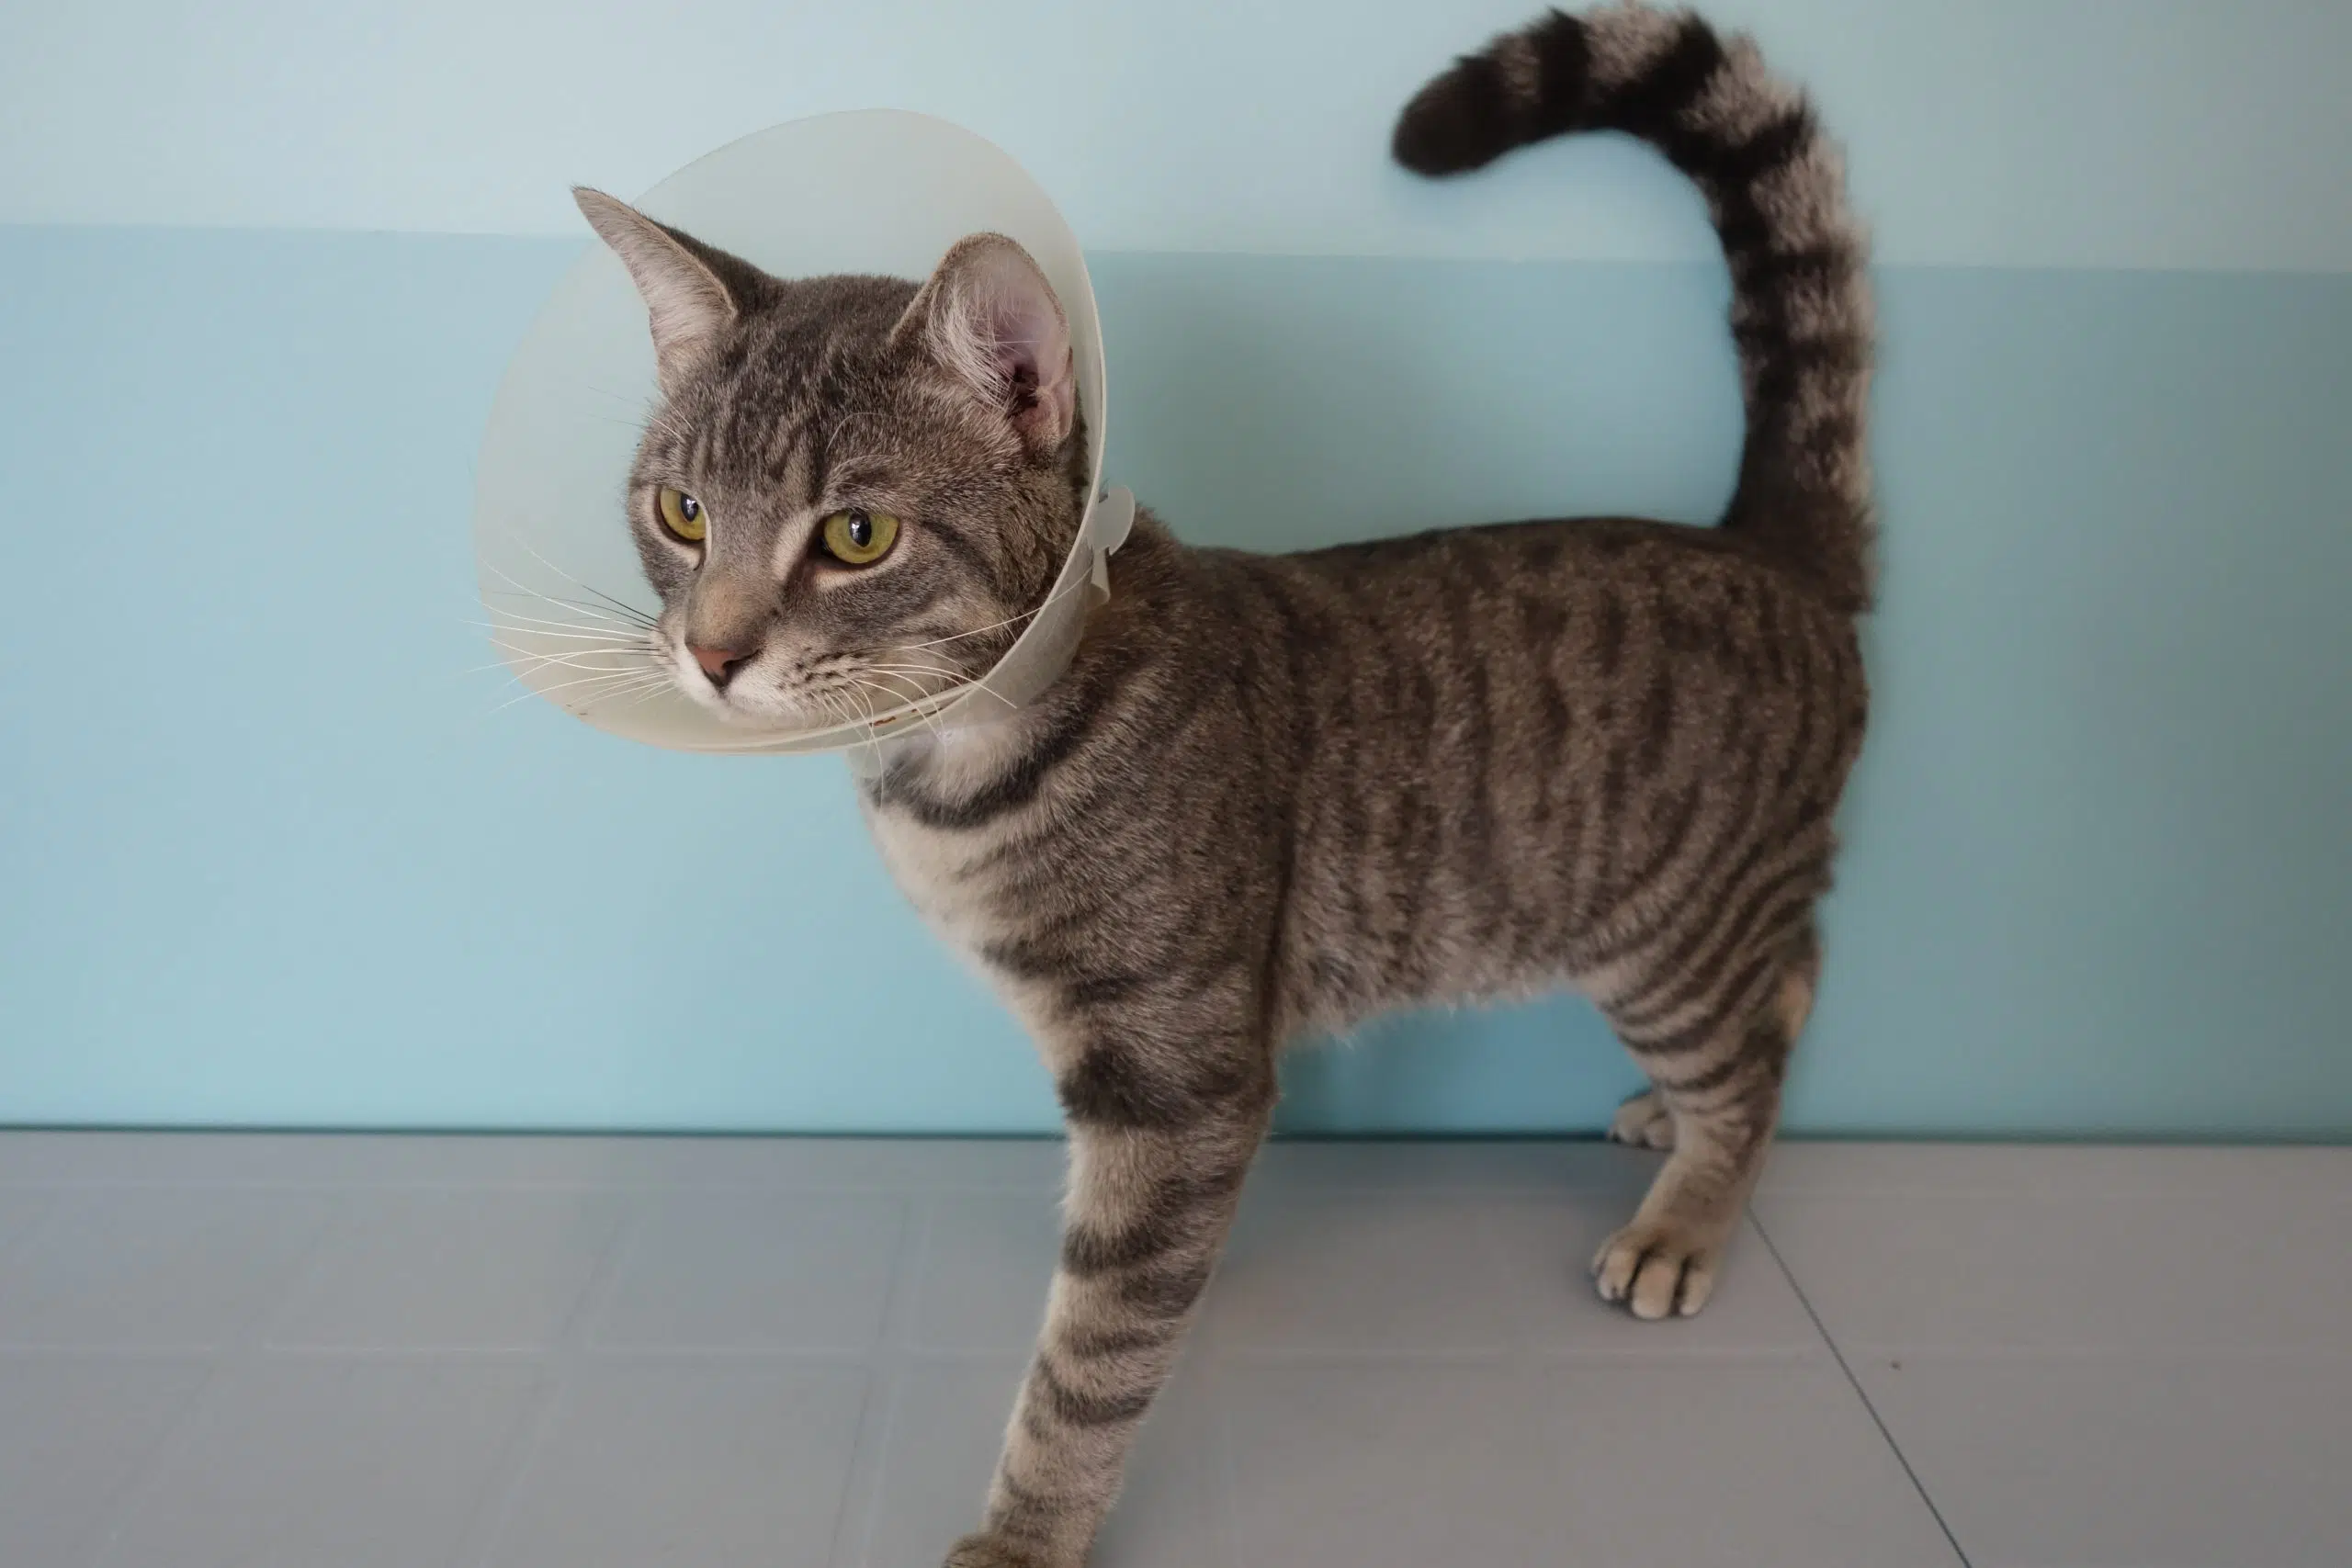 Humane Society looks to identify intentionally injured cat